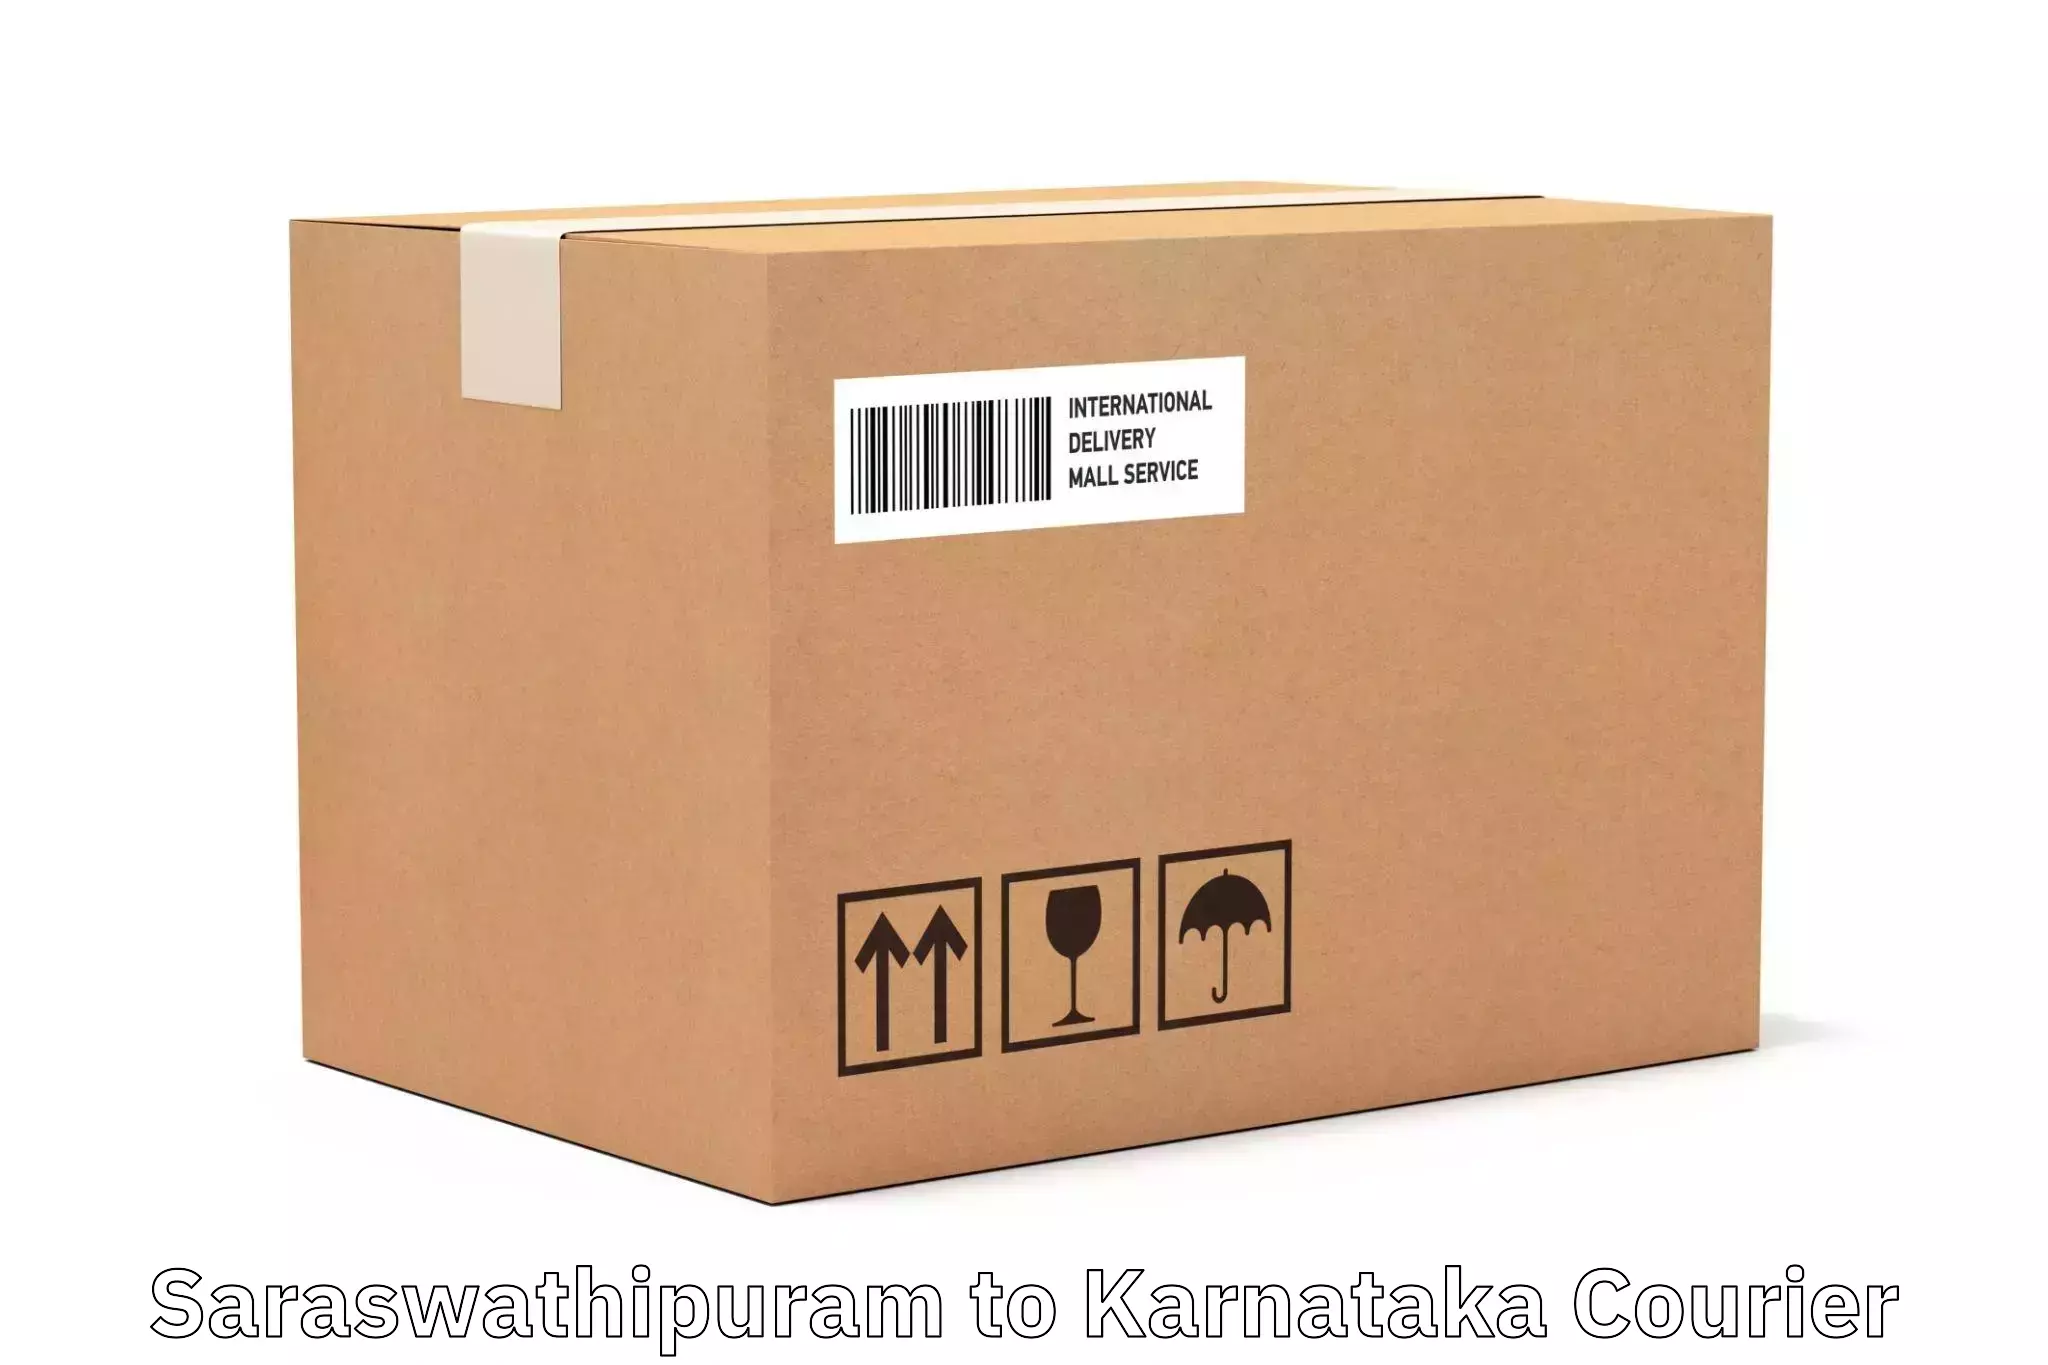 Global logistics network Saraswathipuram to Harpanahalli